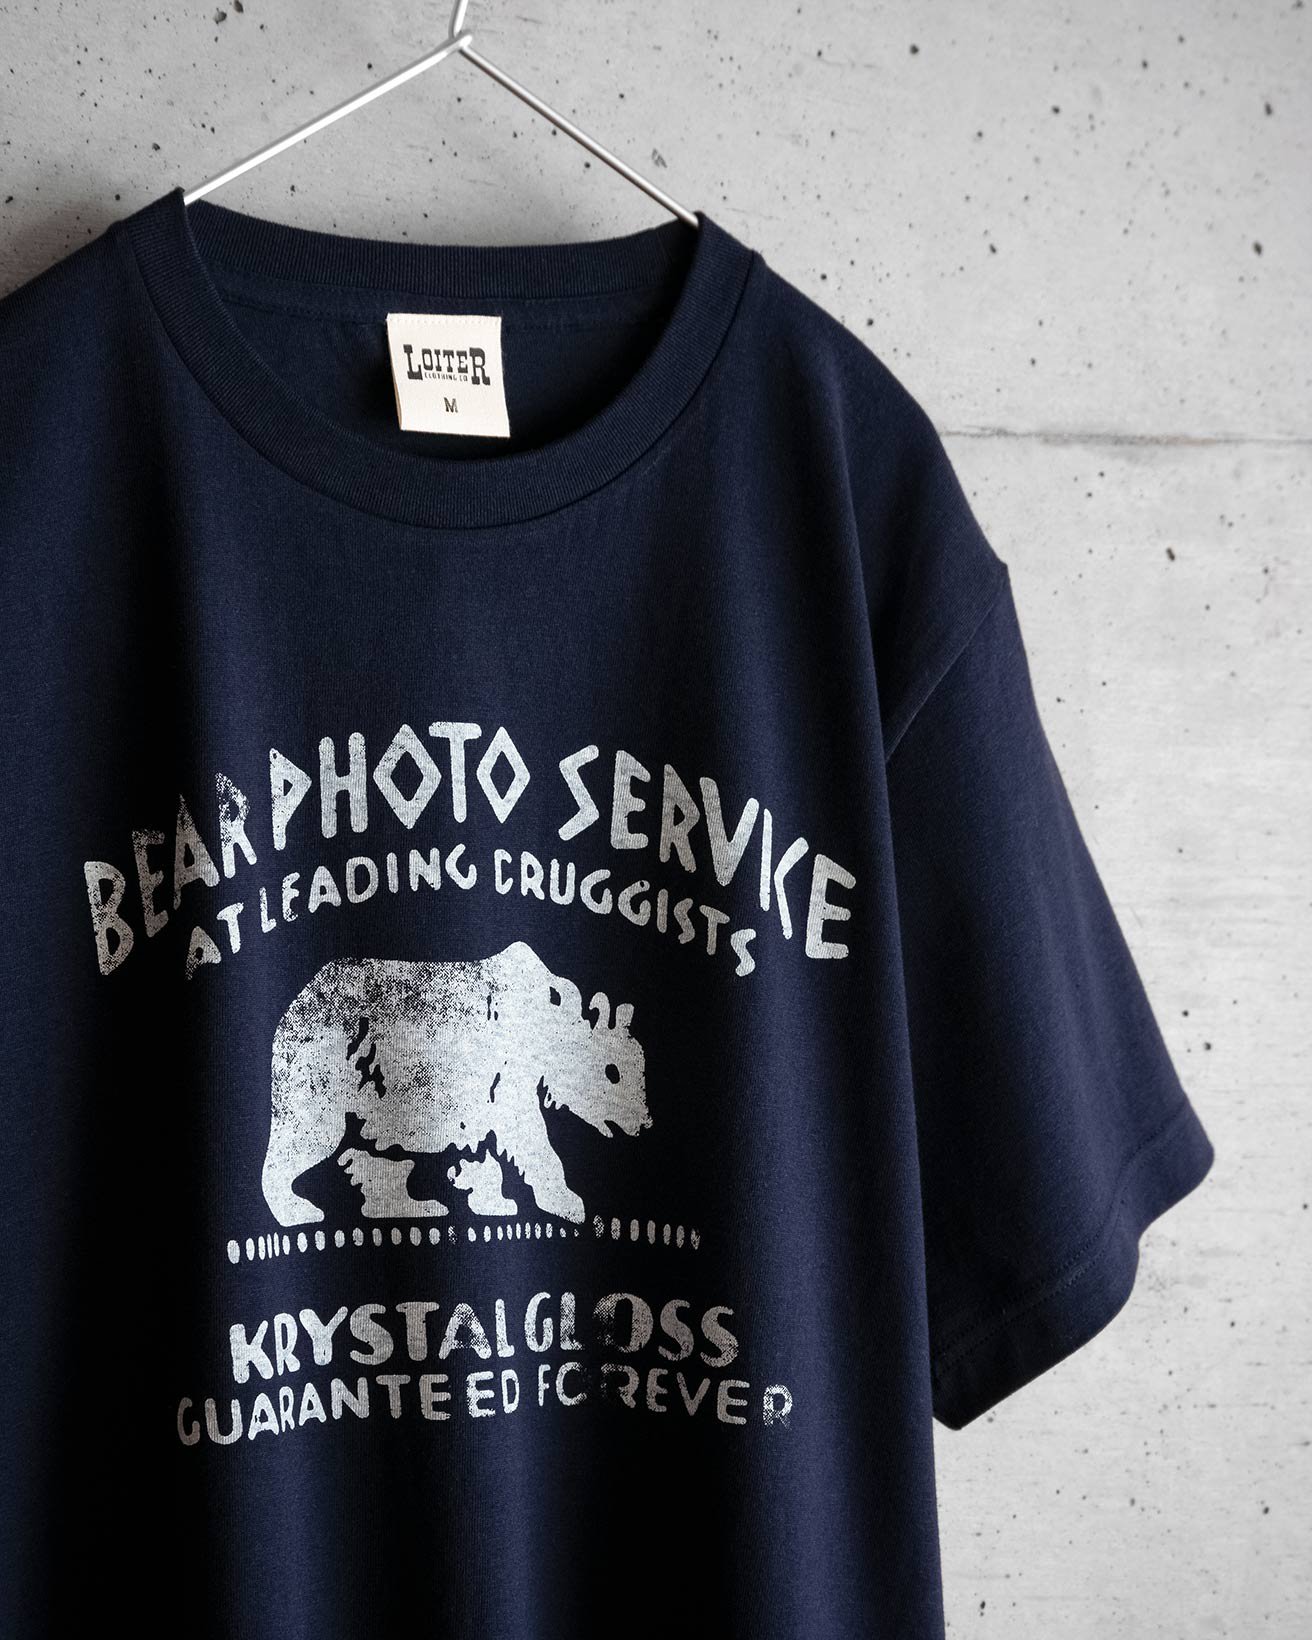 BEAR PHOTO SERVICE Tシャツ